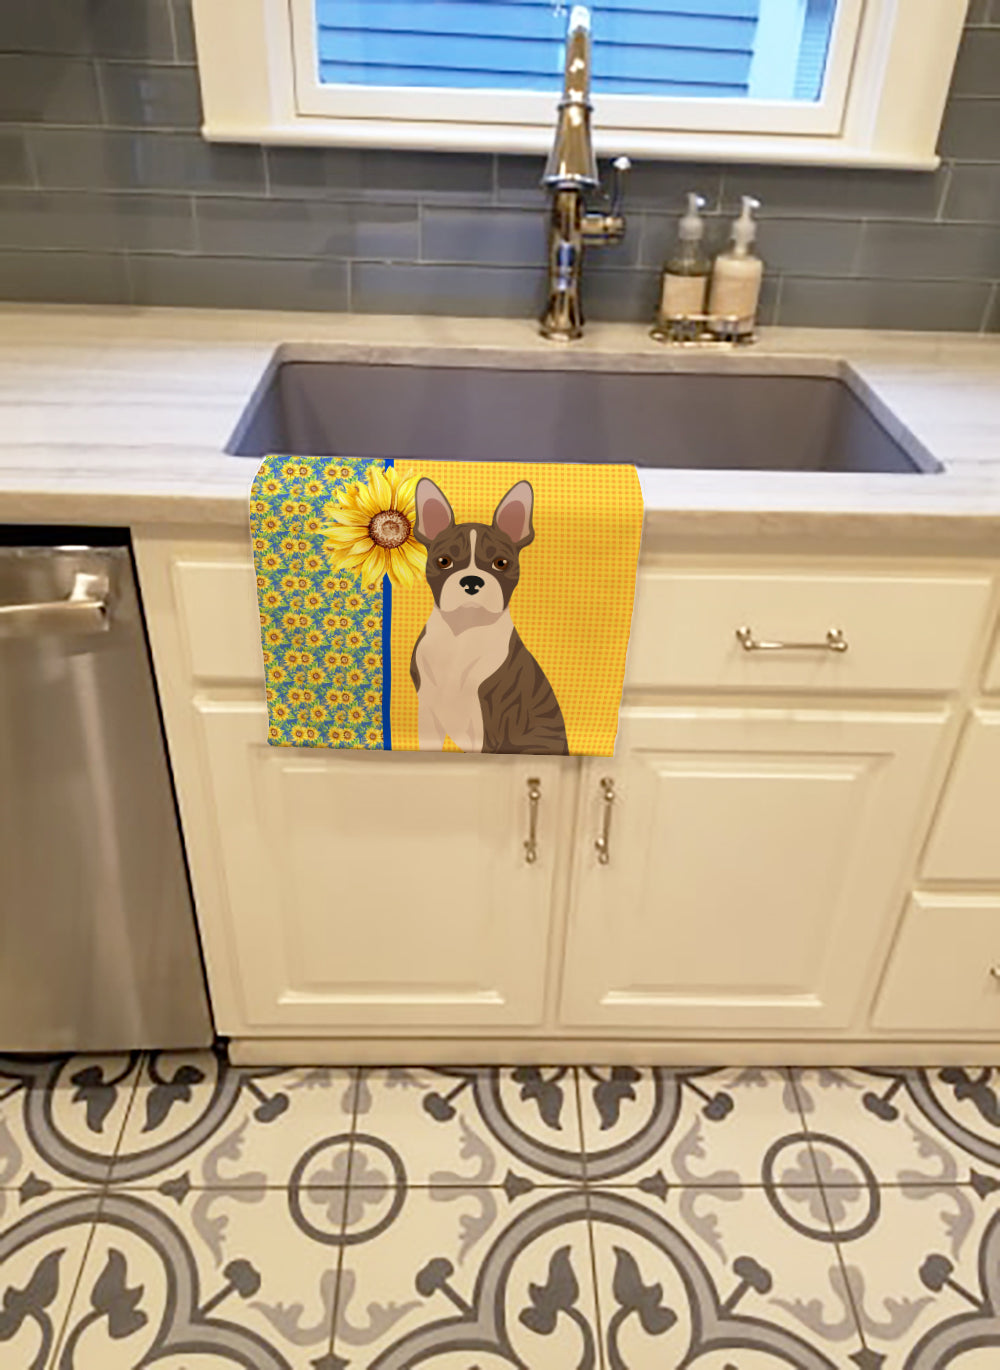 Buy this Summer Sunflowers Brindle Boston Terrier Kitchen Towel